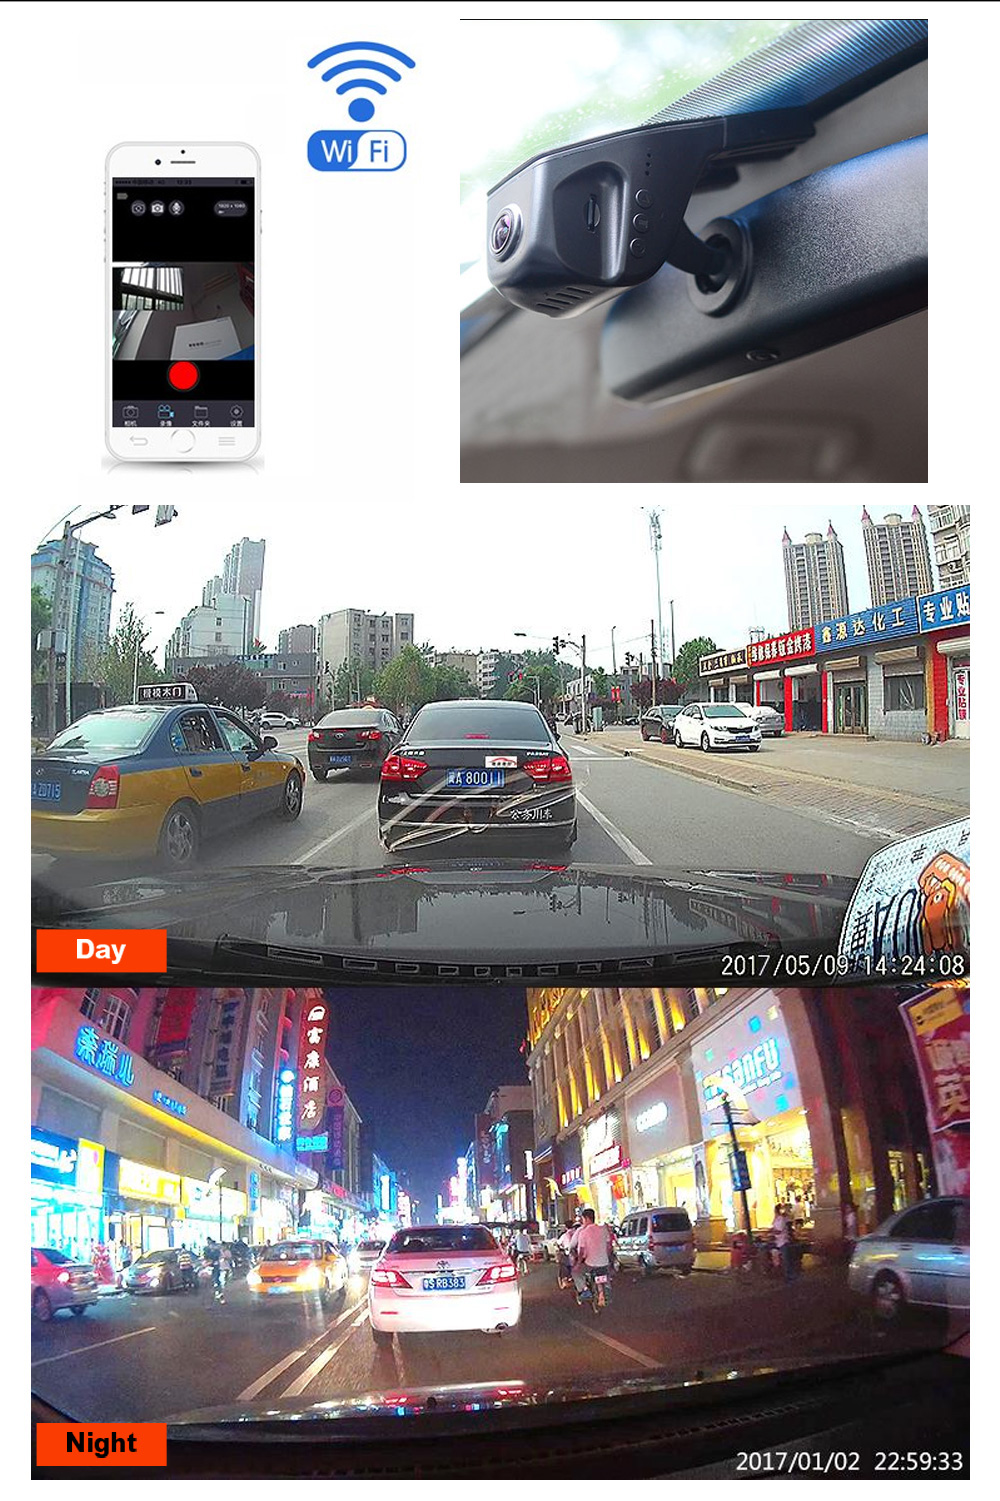 Junsun S200 WiFi Car DVR Dash Camera Full HD 1080p Video Recorder